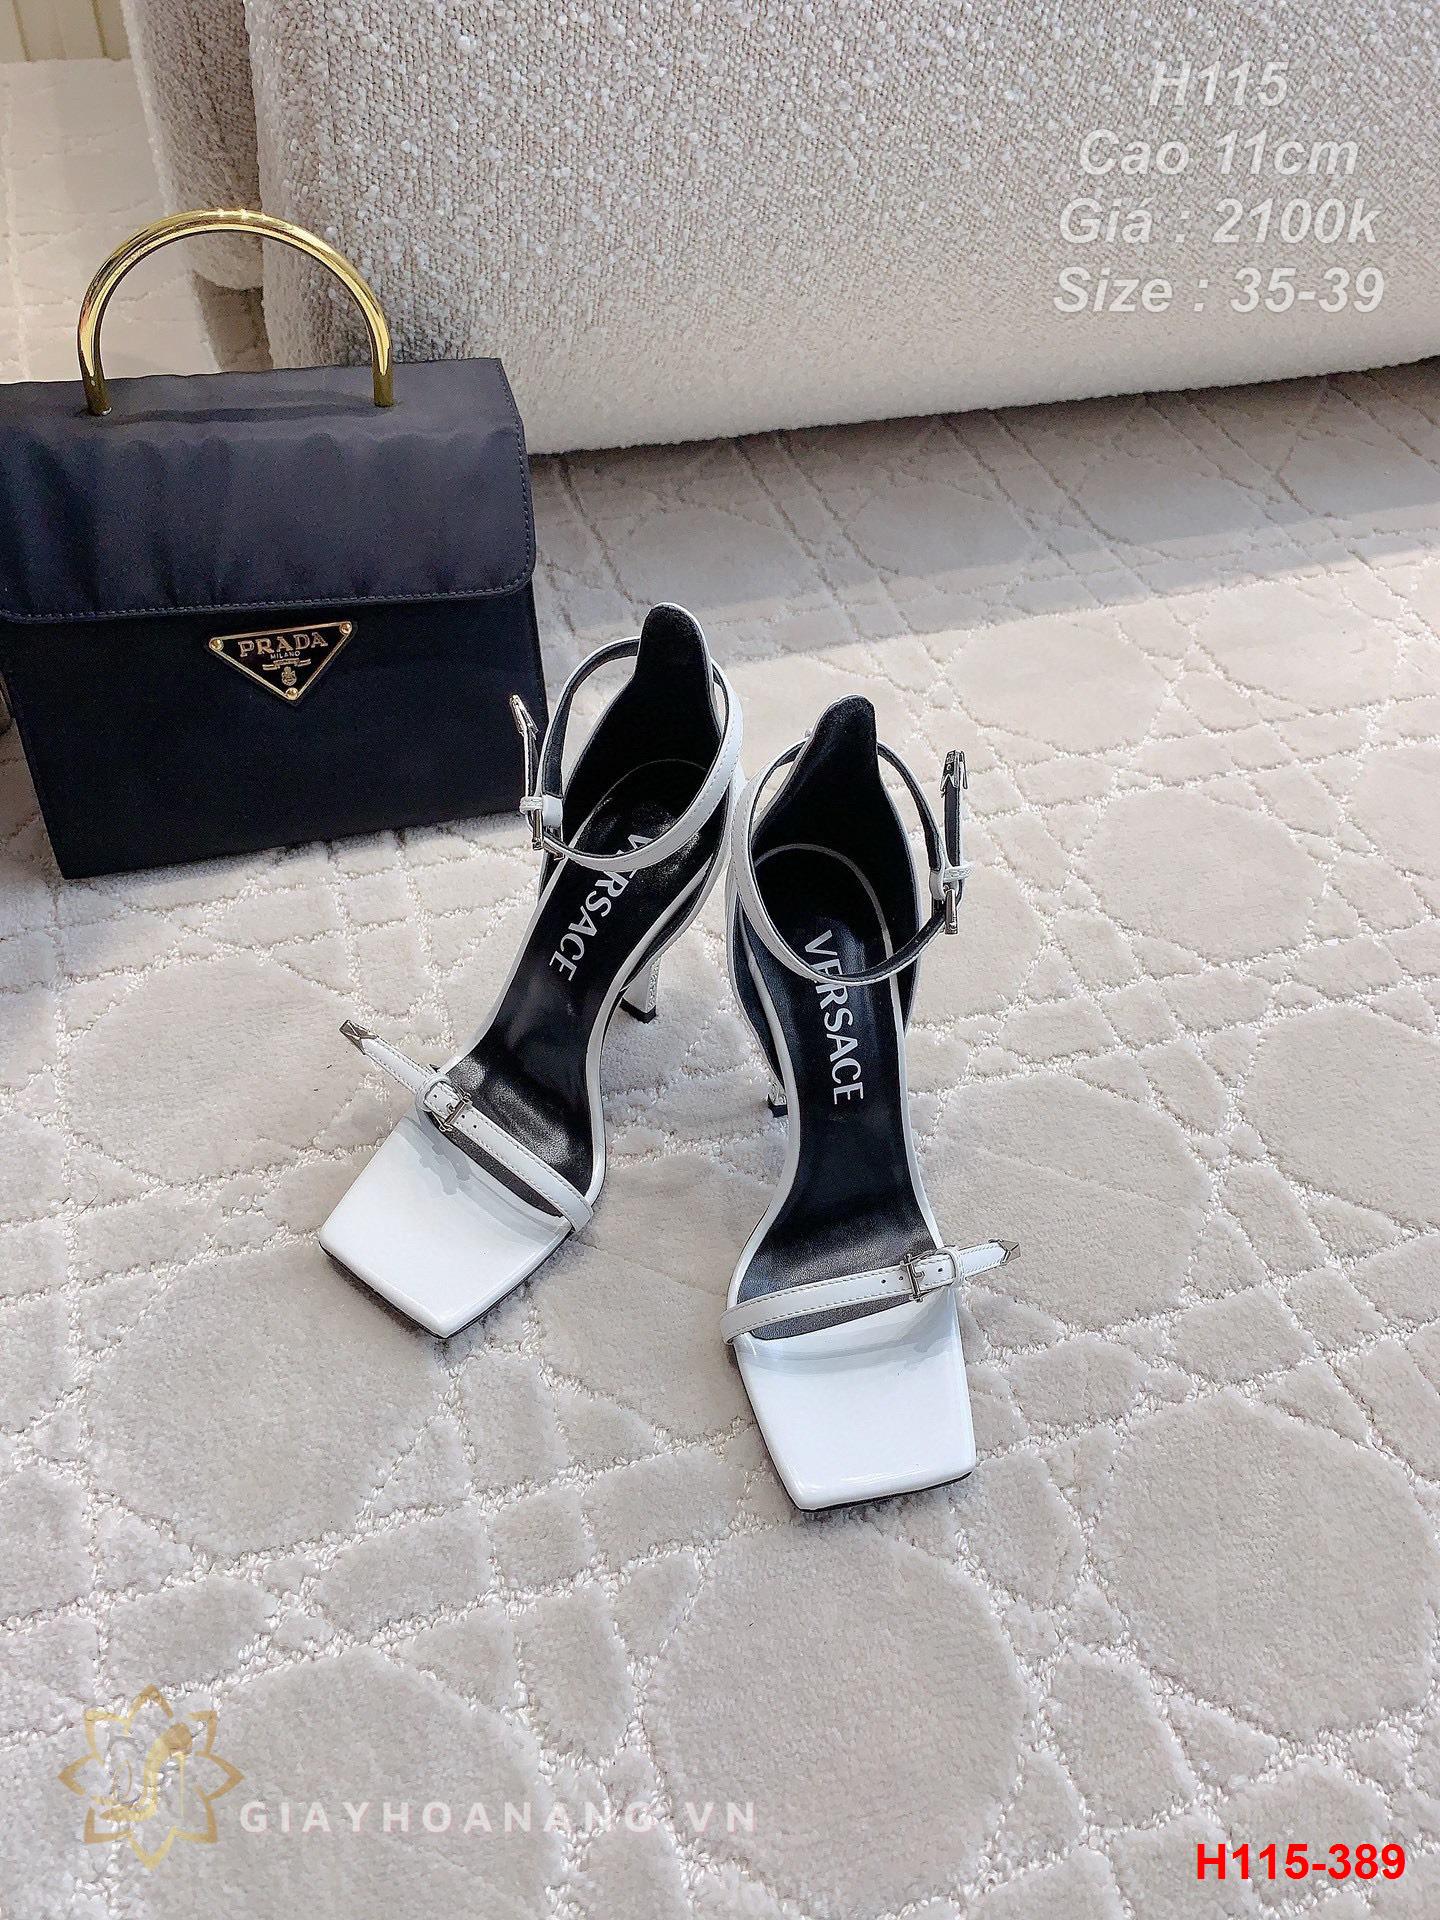 H115-389 Versace sandal cao gót 11cm siêu cấp